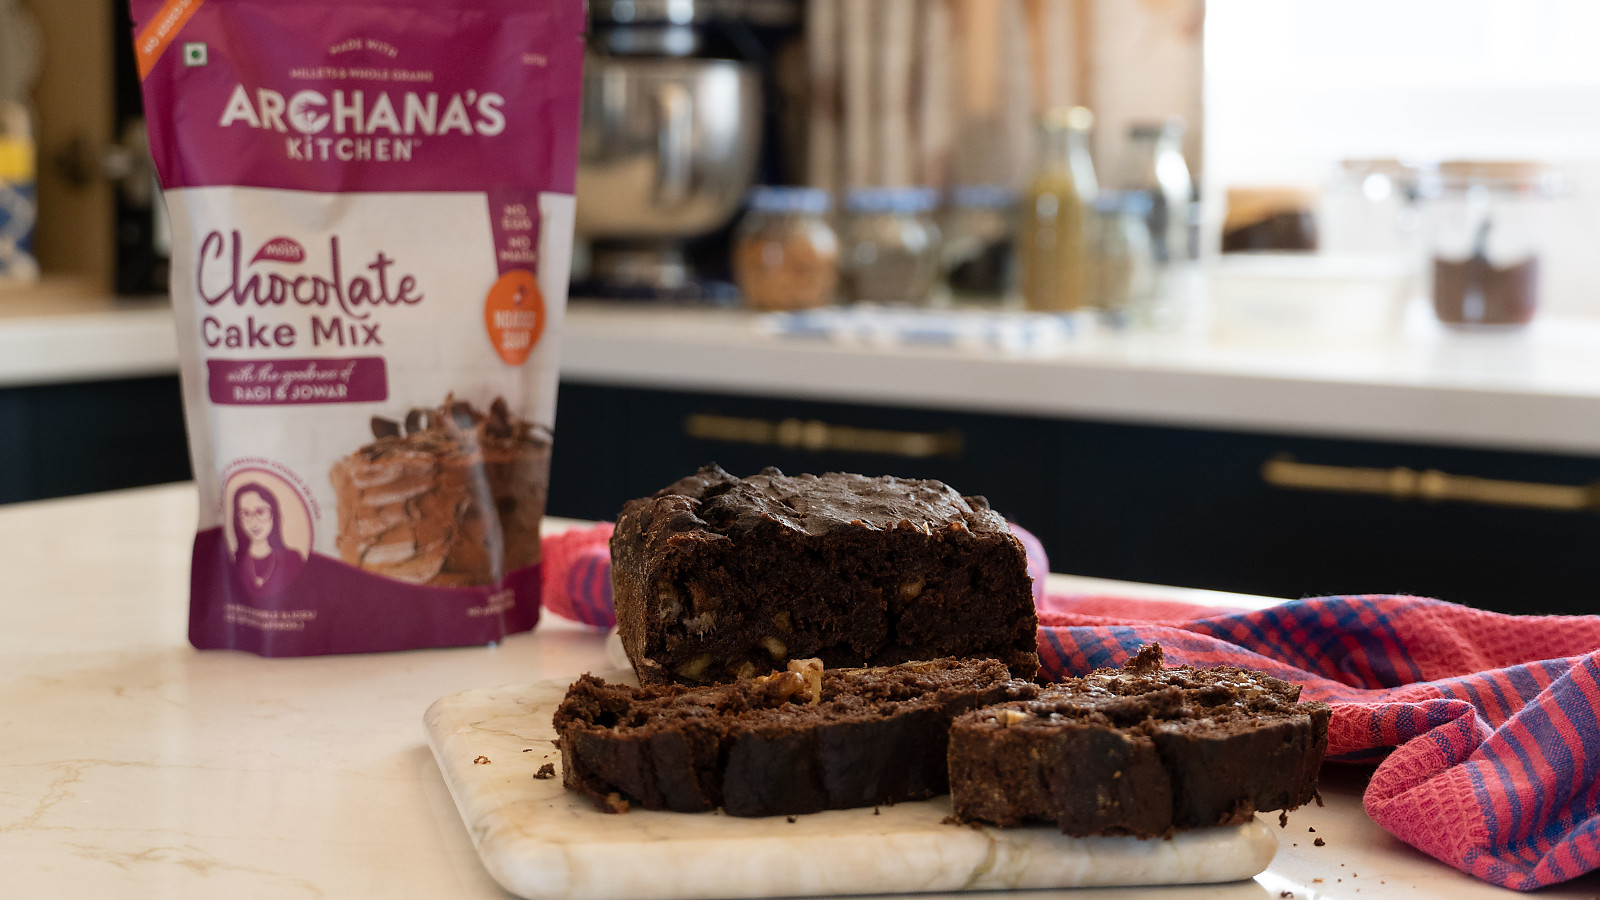 Sugar Free Eggless Chocolate Banana Cake Recipe Using Archana's Kitchen Sugar Free Chocolate Cake Mix